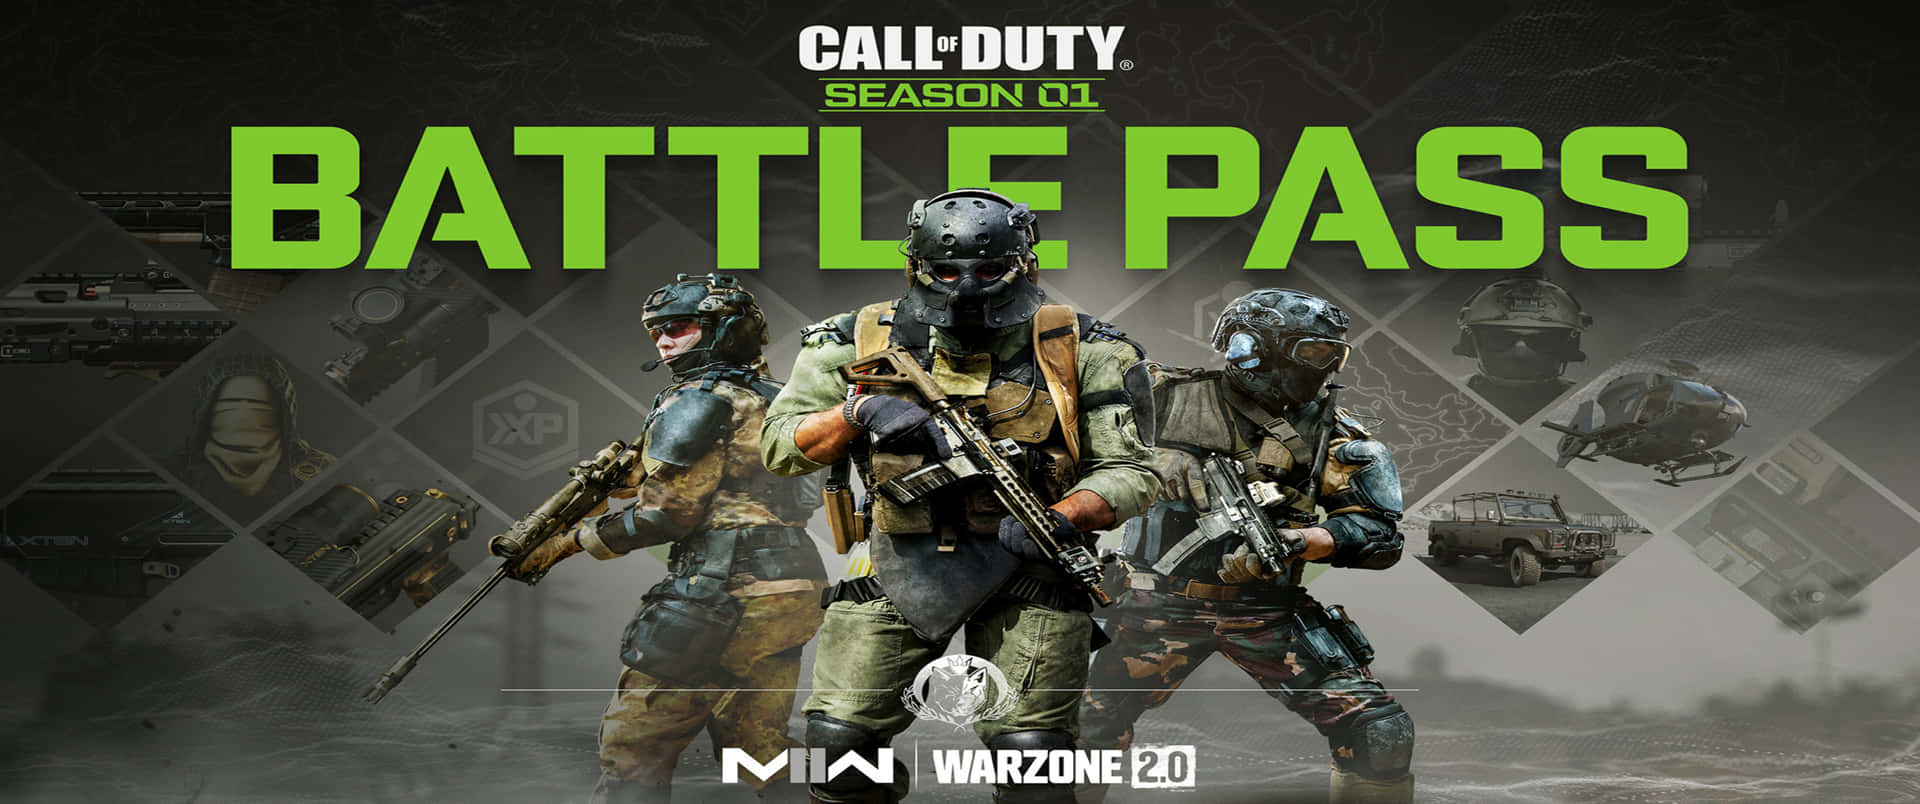 Season 01 Battle Pass 3440x1440p Call Of Duty Modern Warfare Background